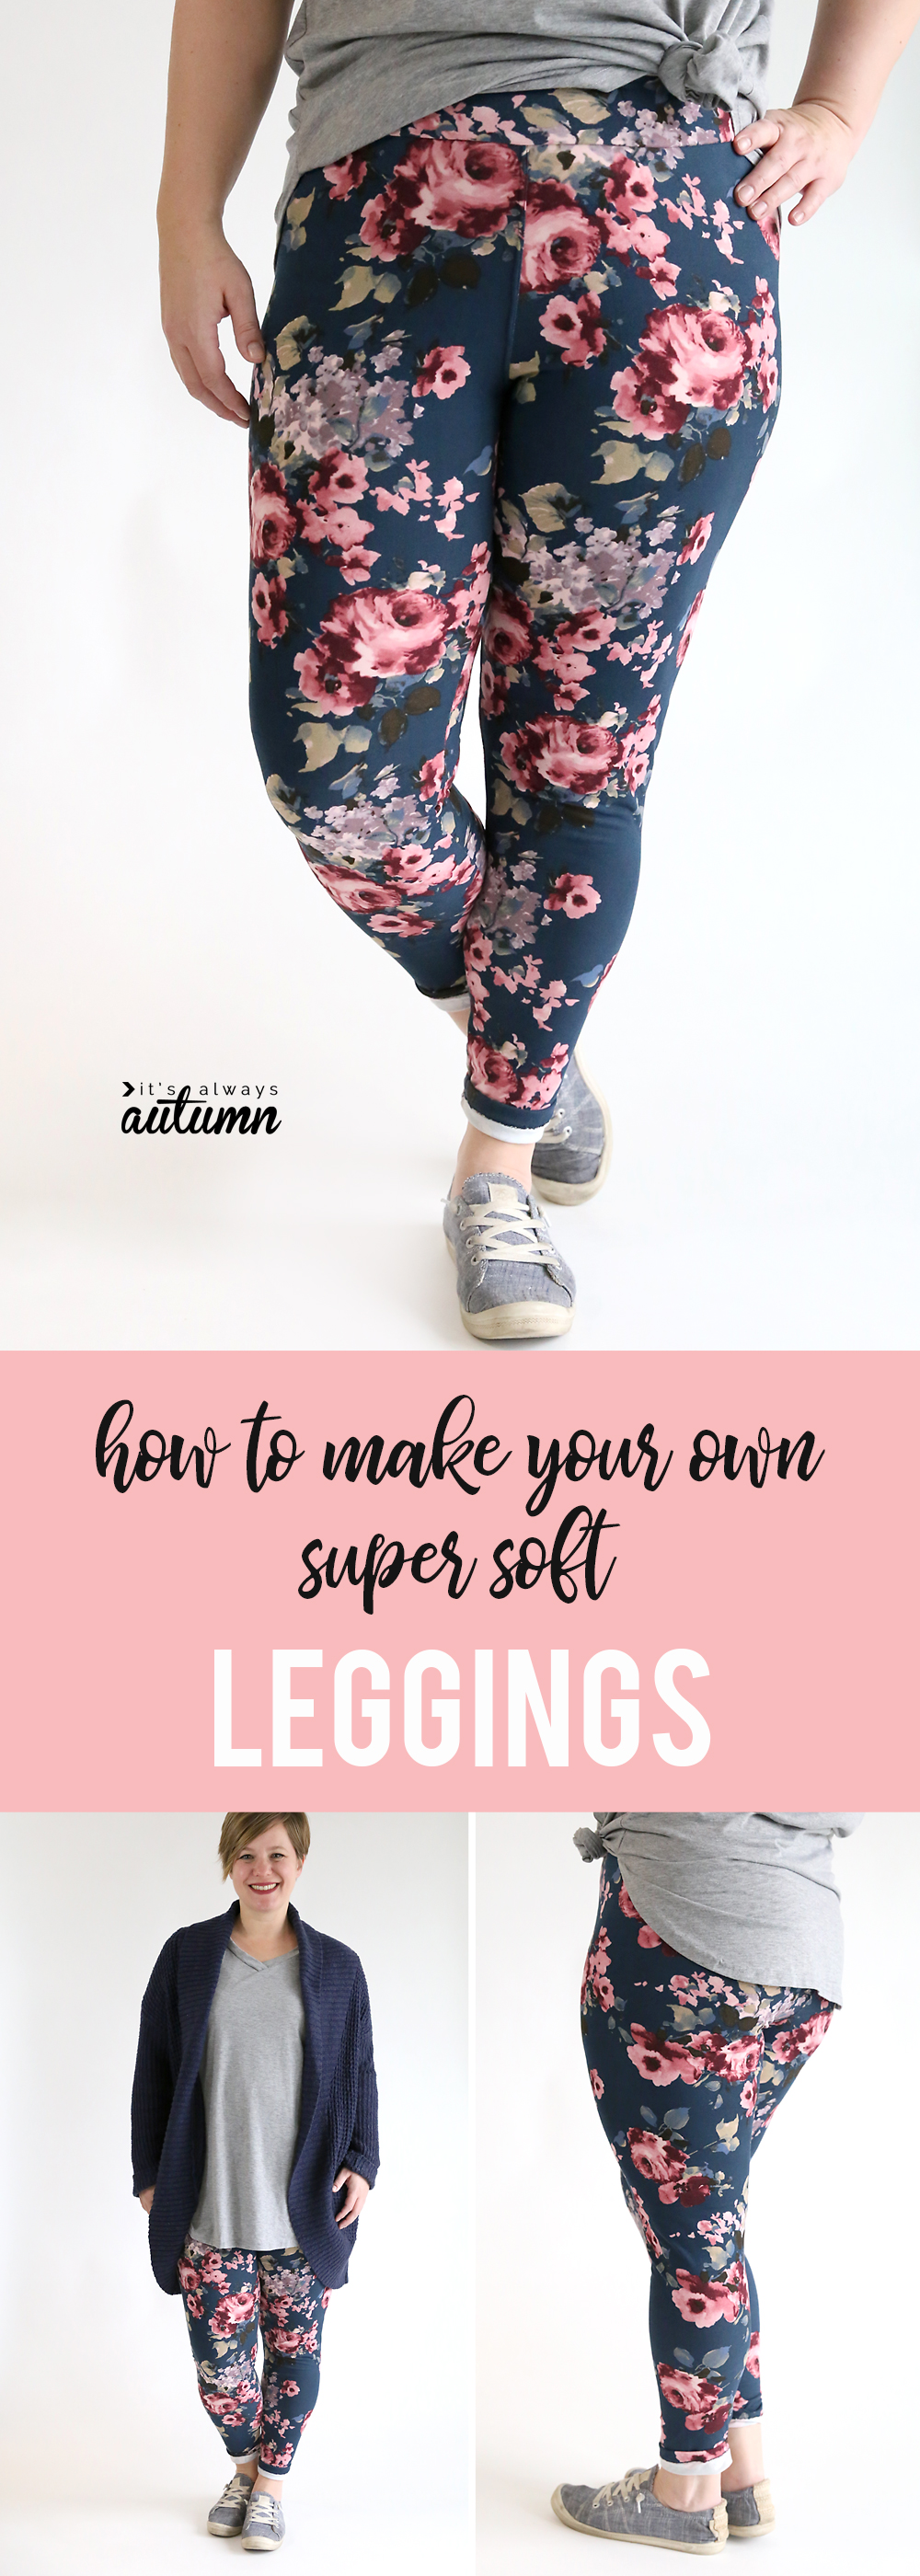 How to Sew Super Soft Leggings - It's Always Autumn